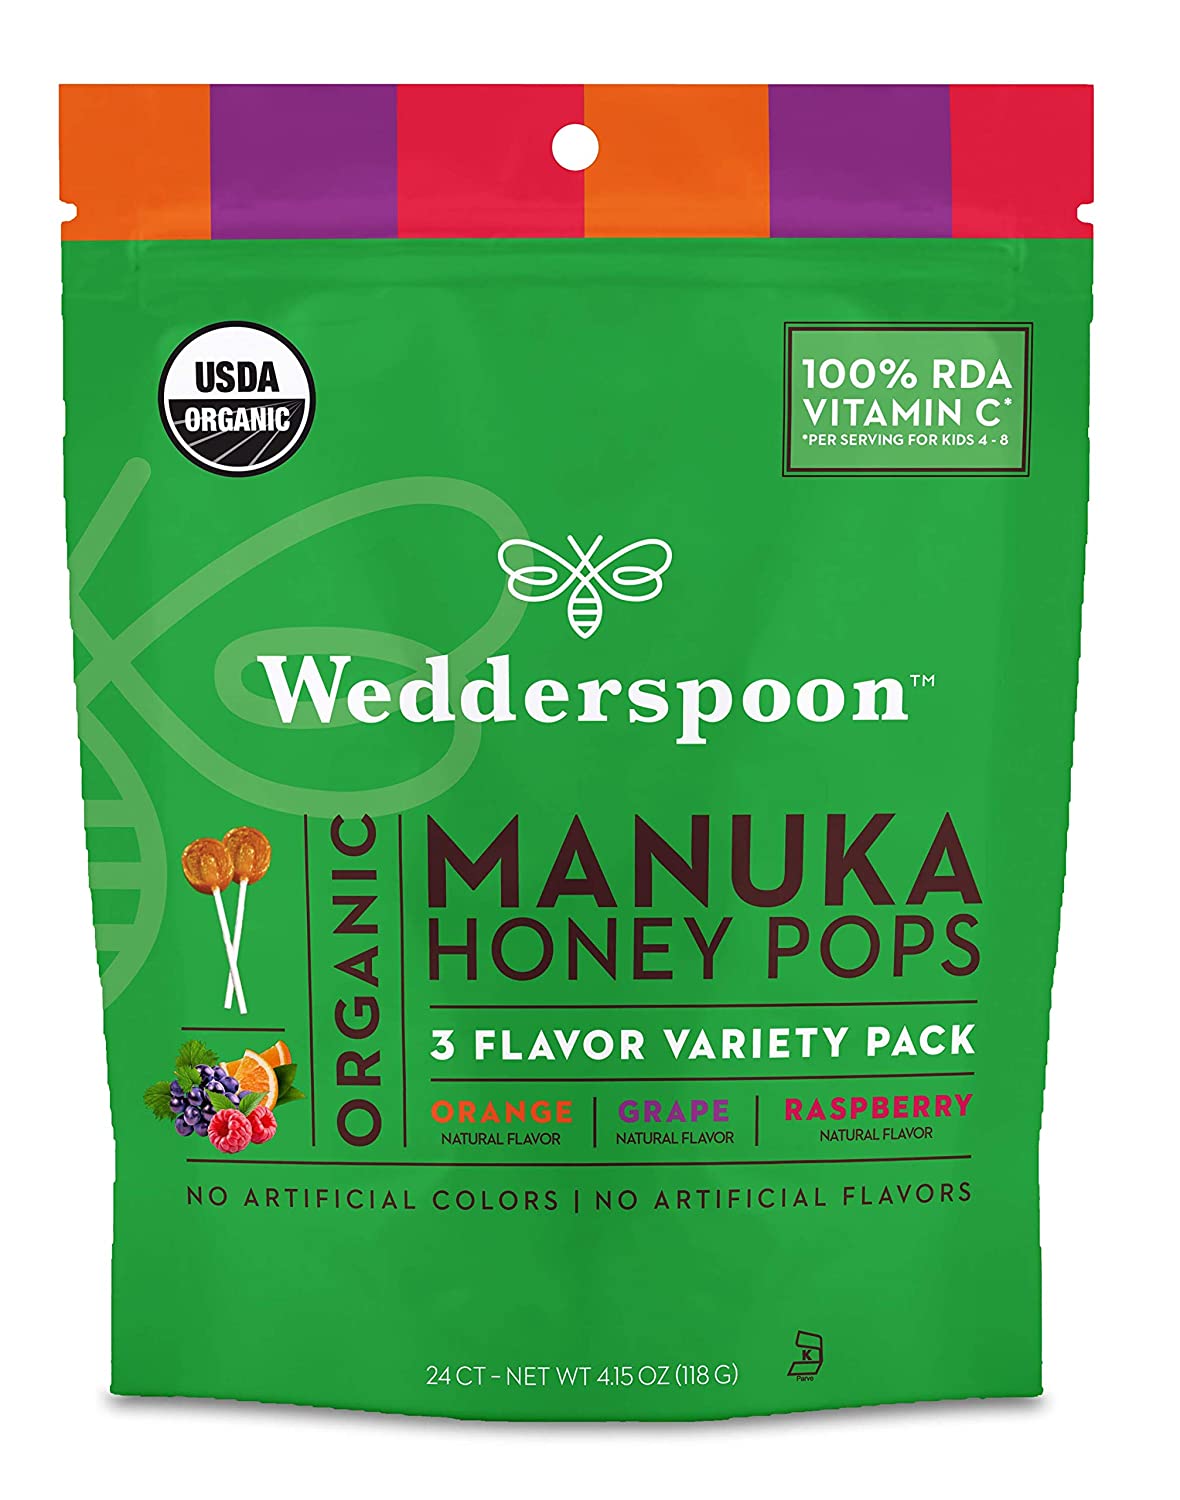 Wedderspoon Organic, 마누카 허니 Lozenges with 비 프로폴리스, 4 oz (120 g)